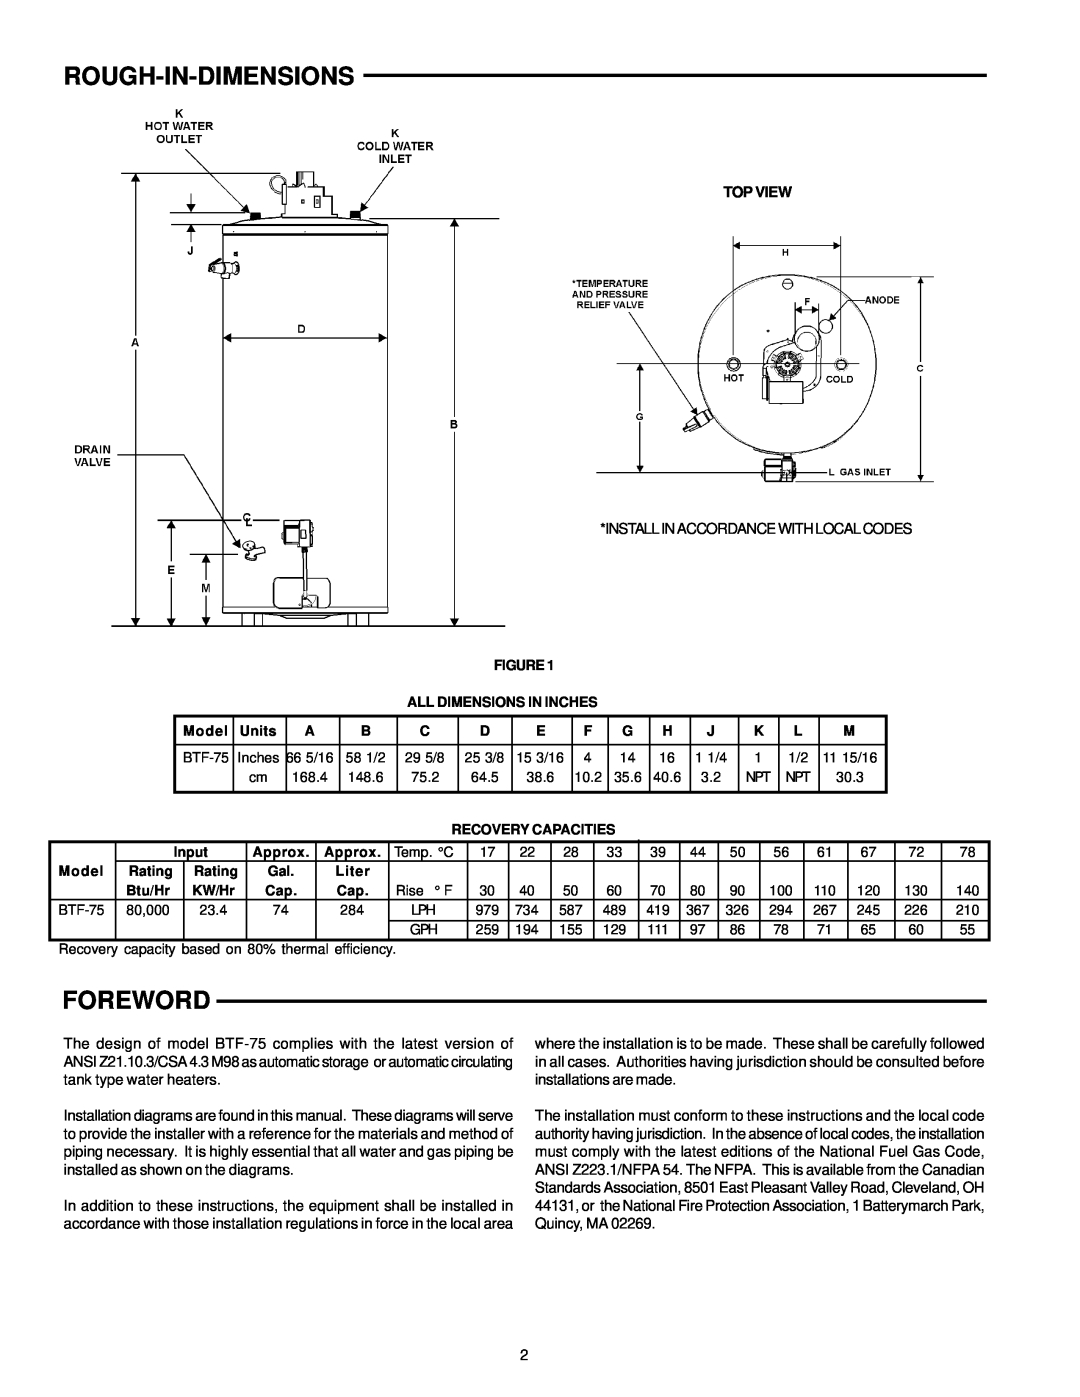 A.O. Smith BTF-75 warranty Rough-In-Dimensions, Foreword 